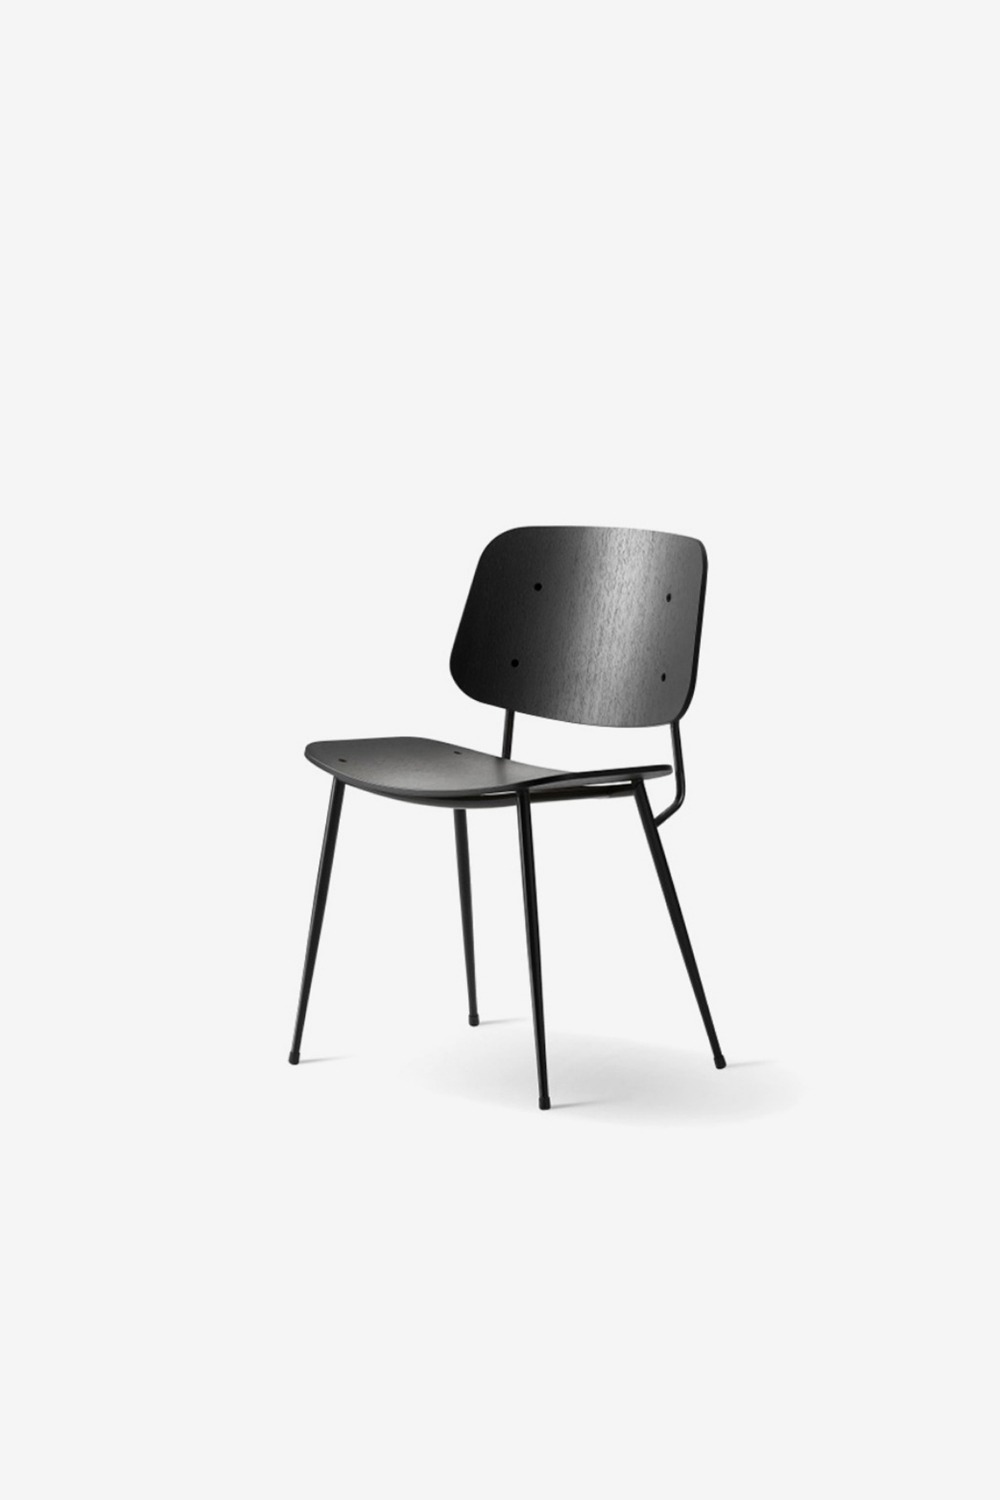 [Fredericia] Soborg chair black (Steelbase) /3060